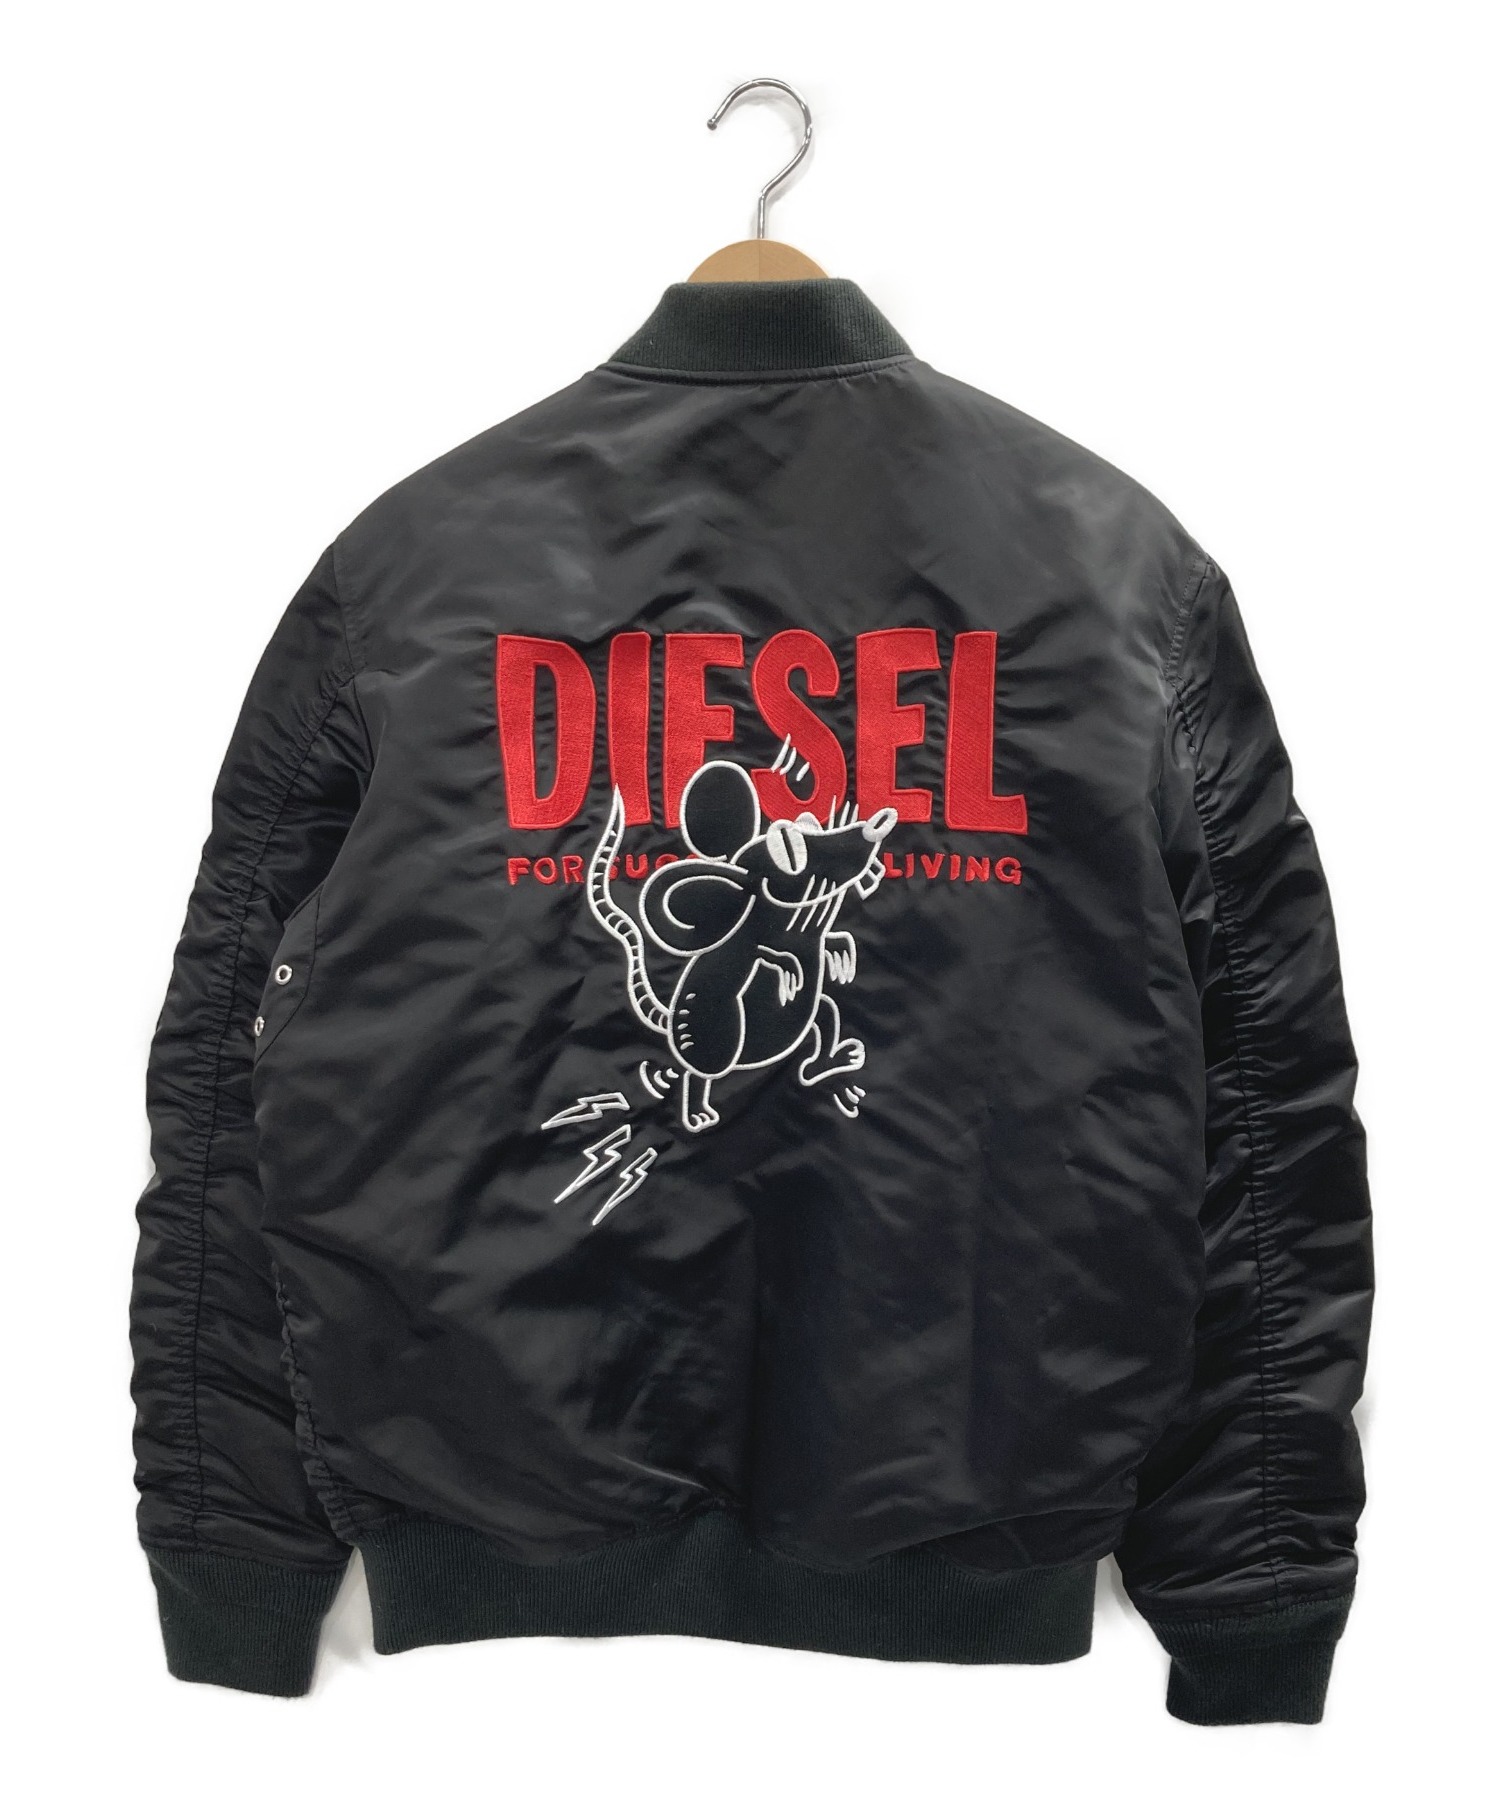 DIESEL (ディーゼル) リバーシブルジャケット ブラック サイズ:XS